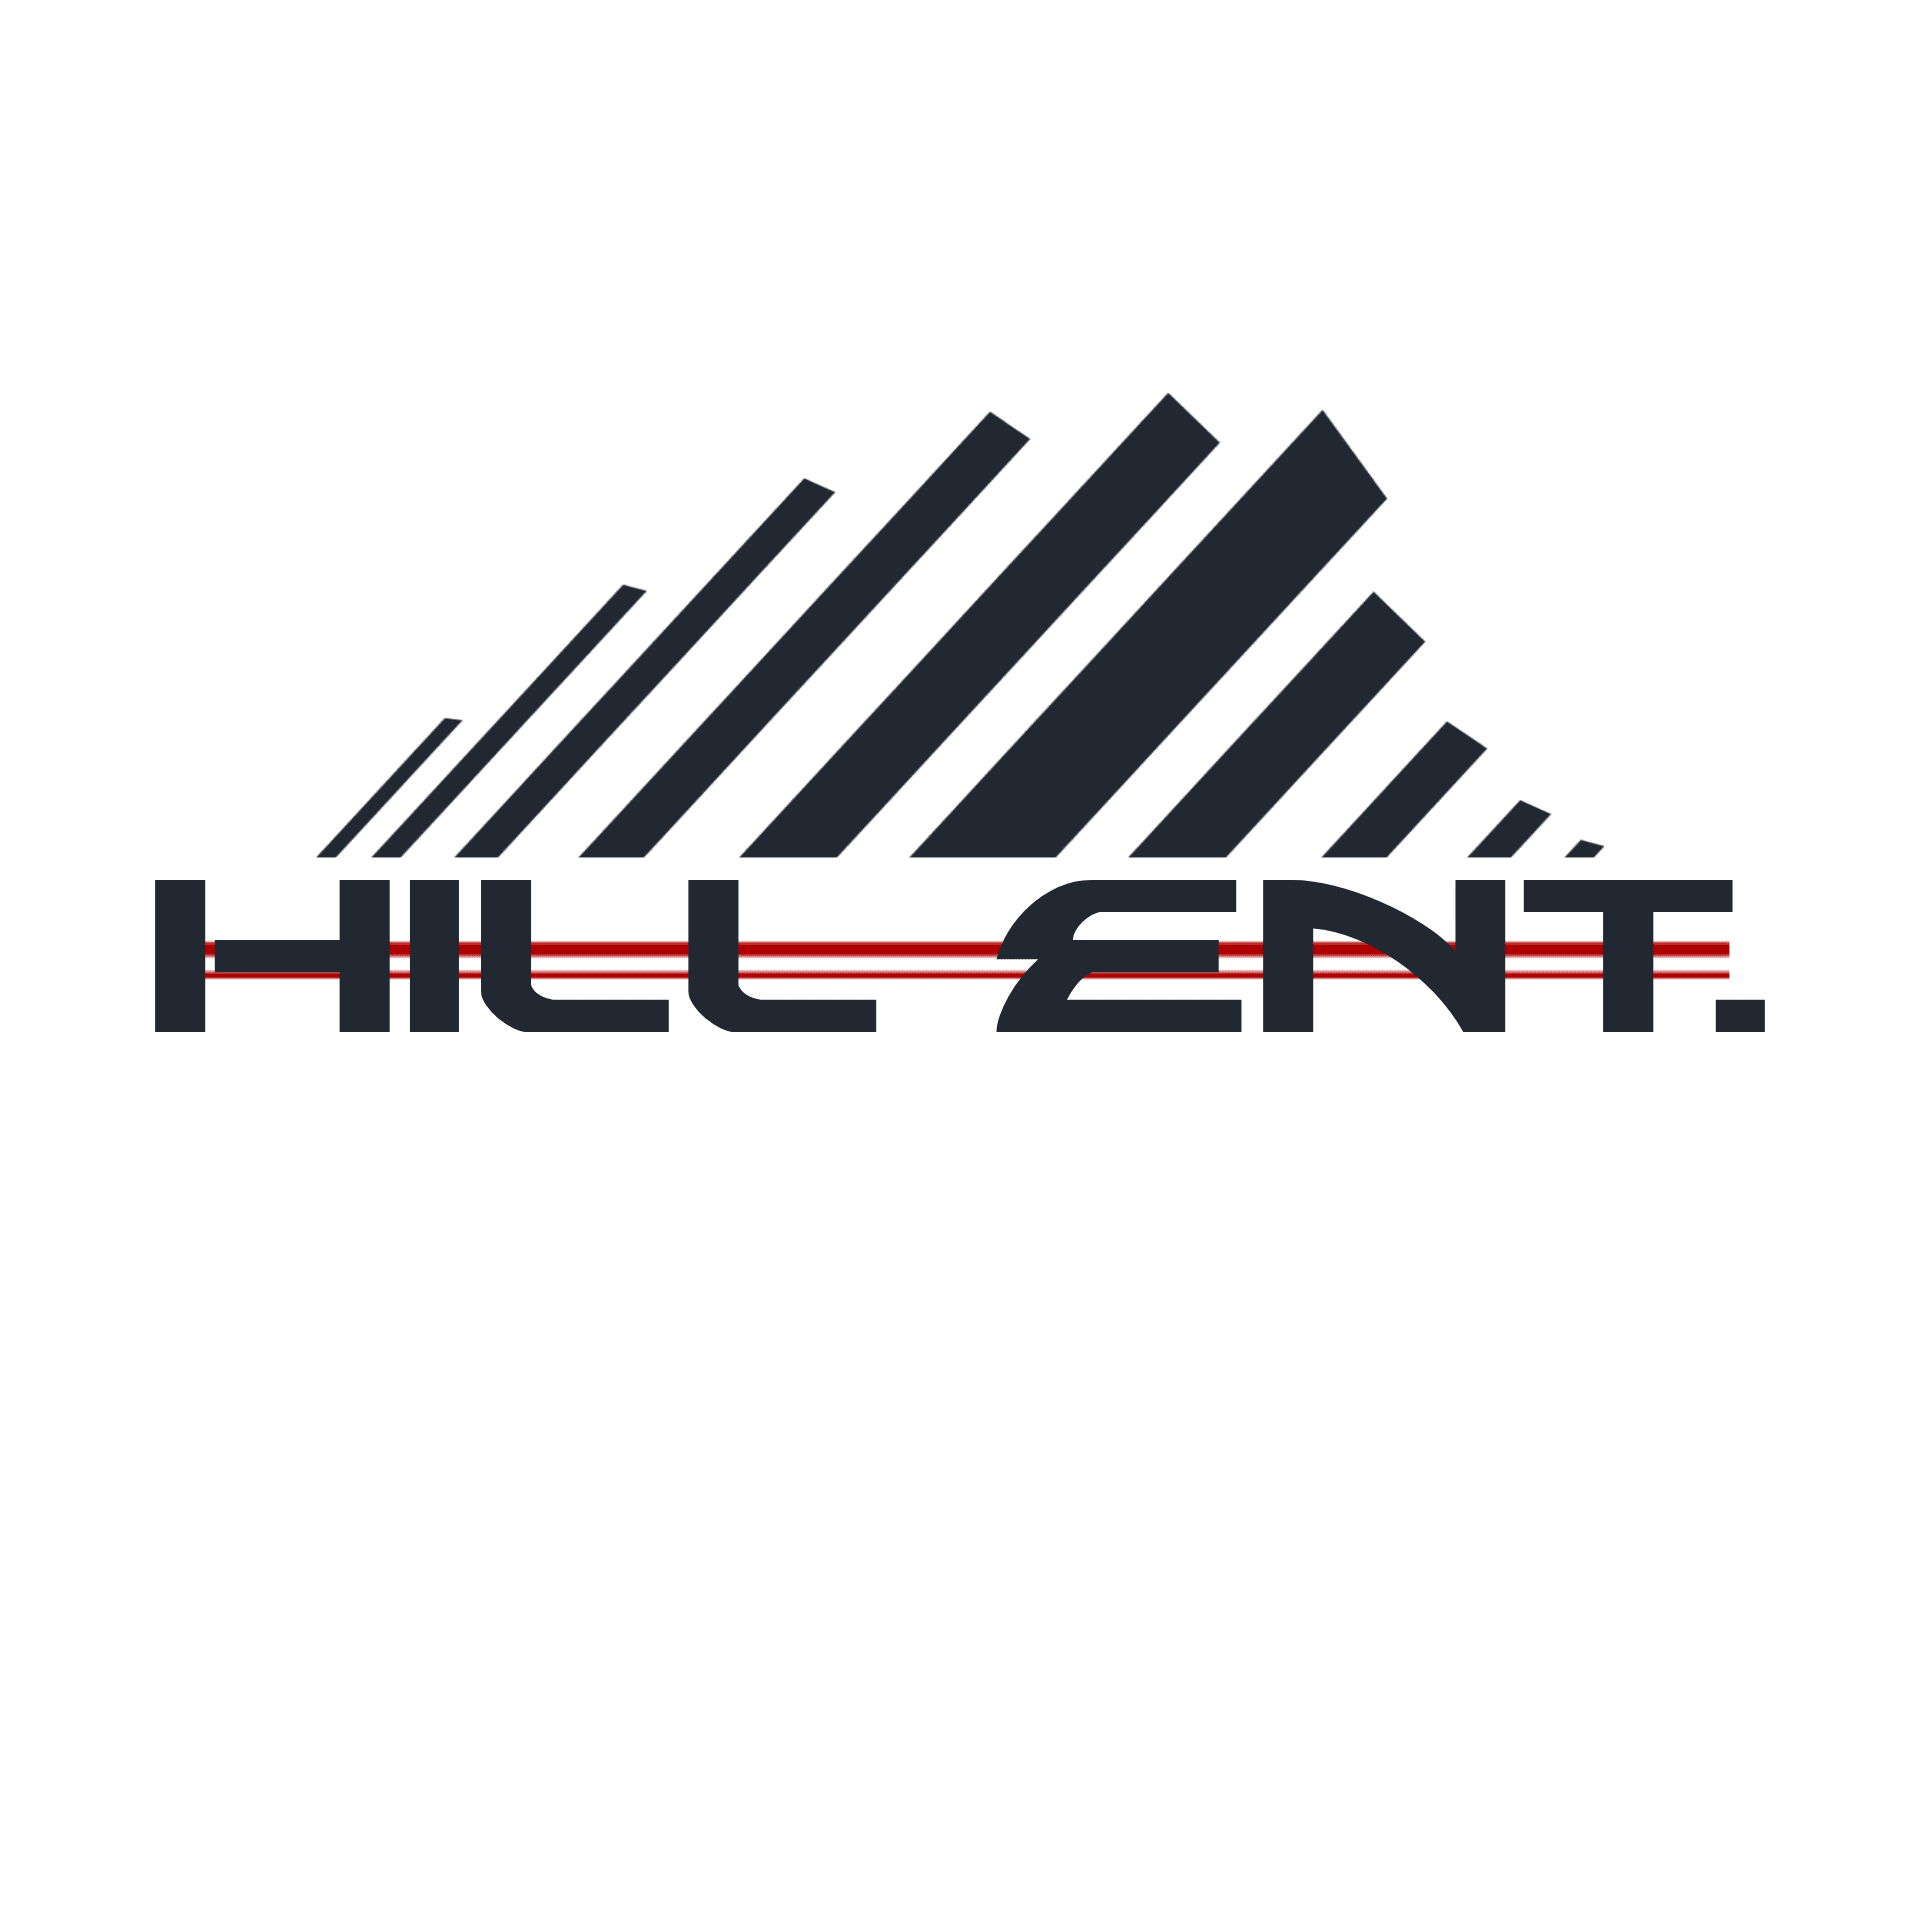 Hill Entertainment